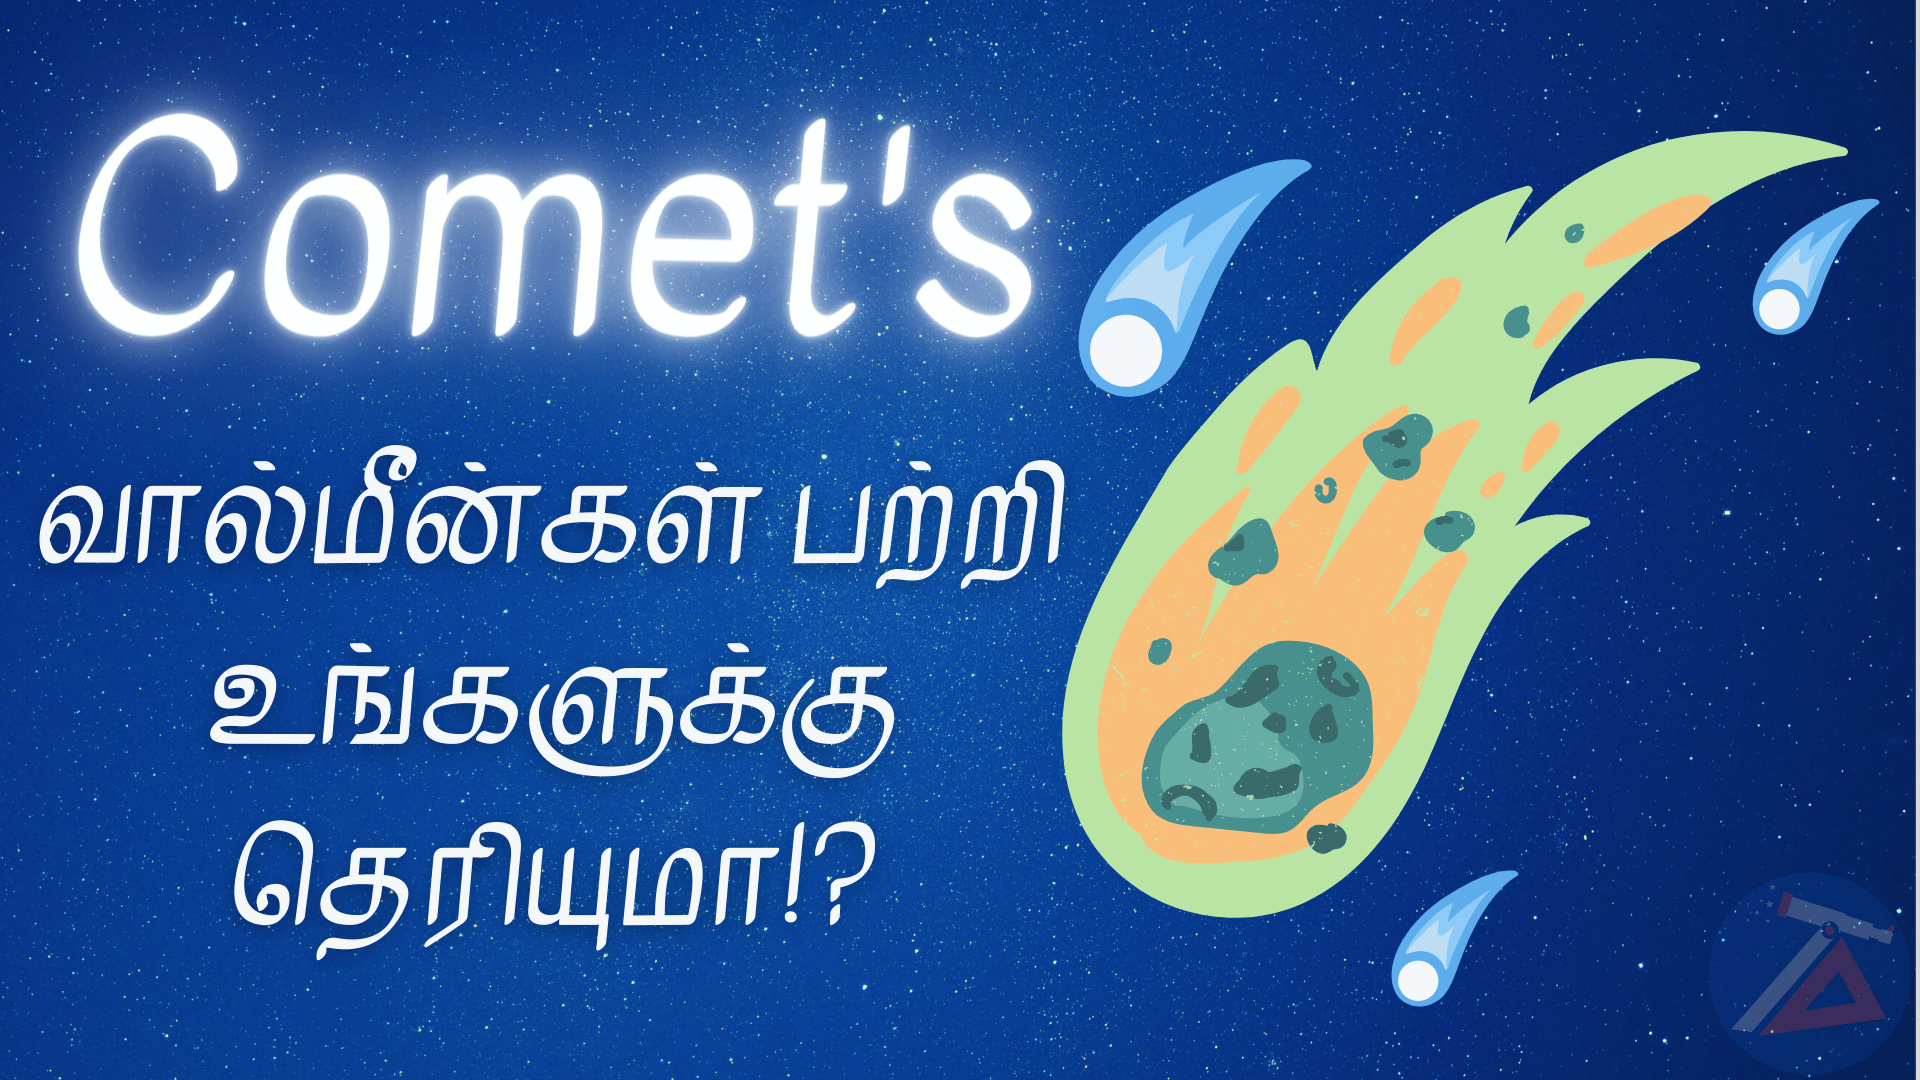 Tamil Astronomy Comet's